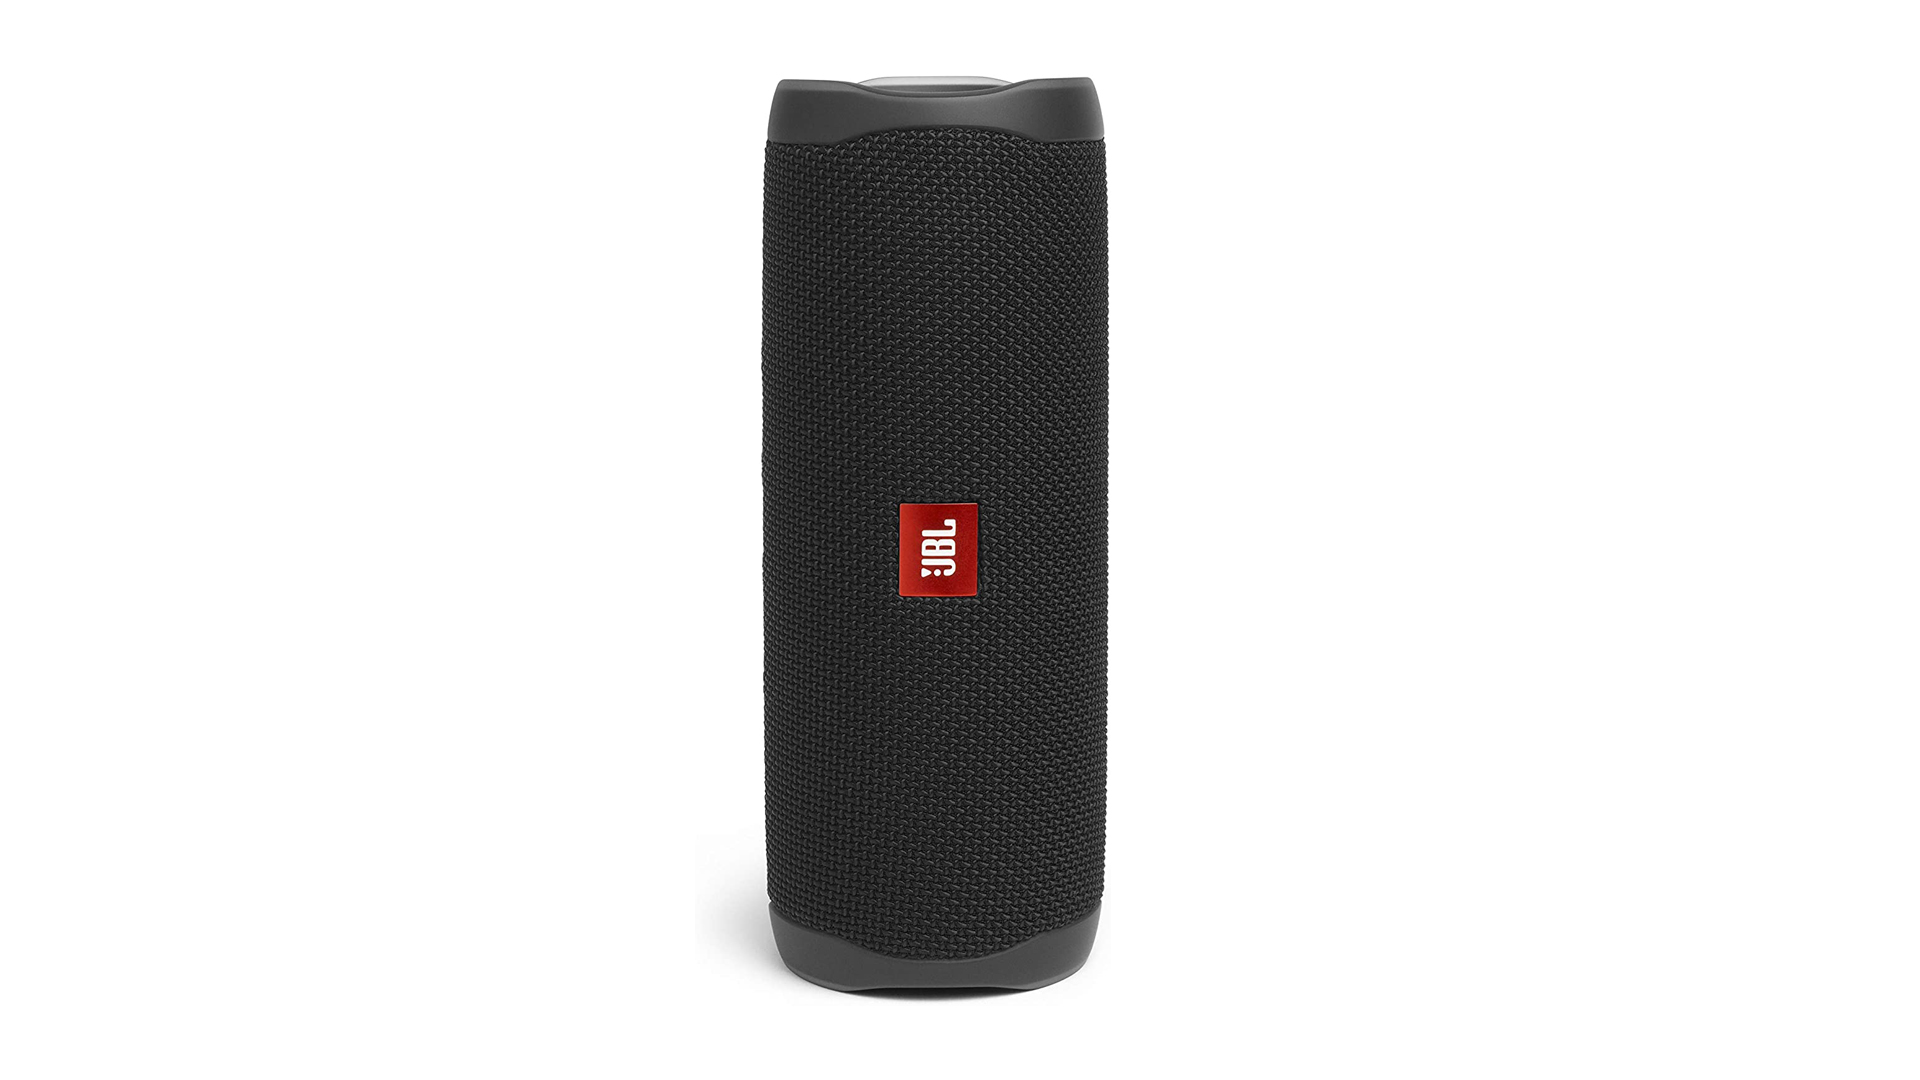 The JBL Flip 5 portable Bluetooth speaker in black against a white background.